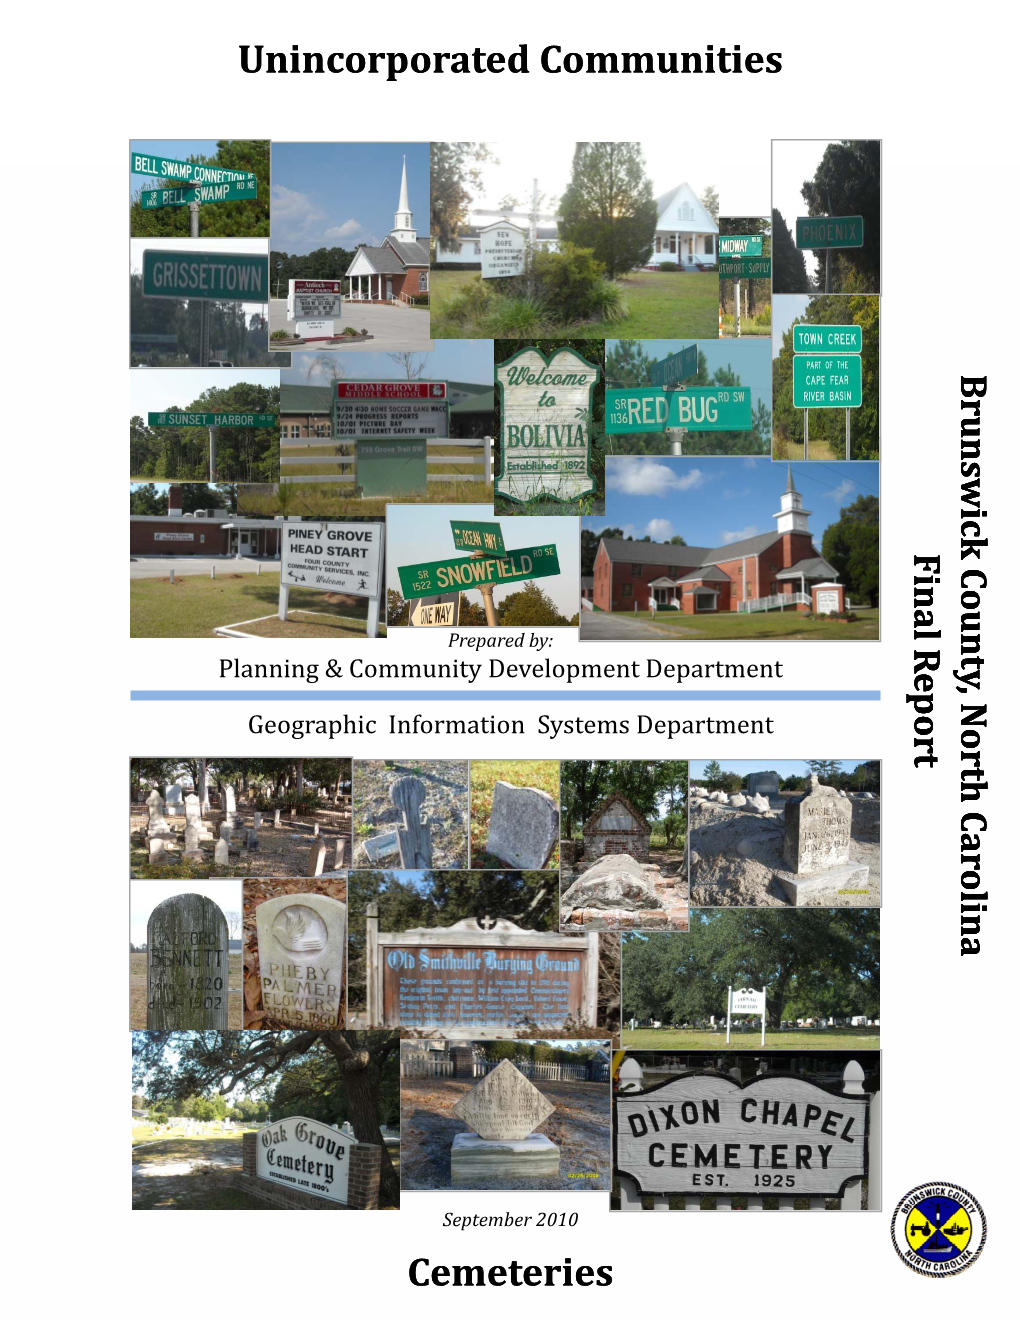 Unincorporated Communities Cemeteries